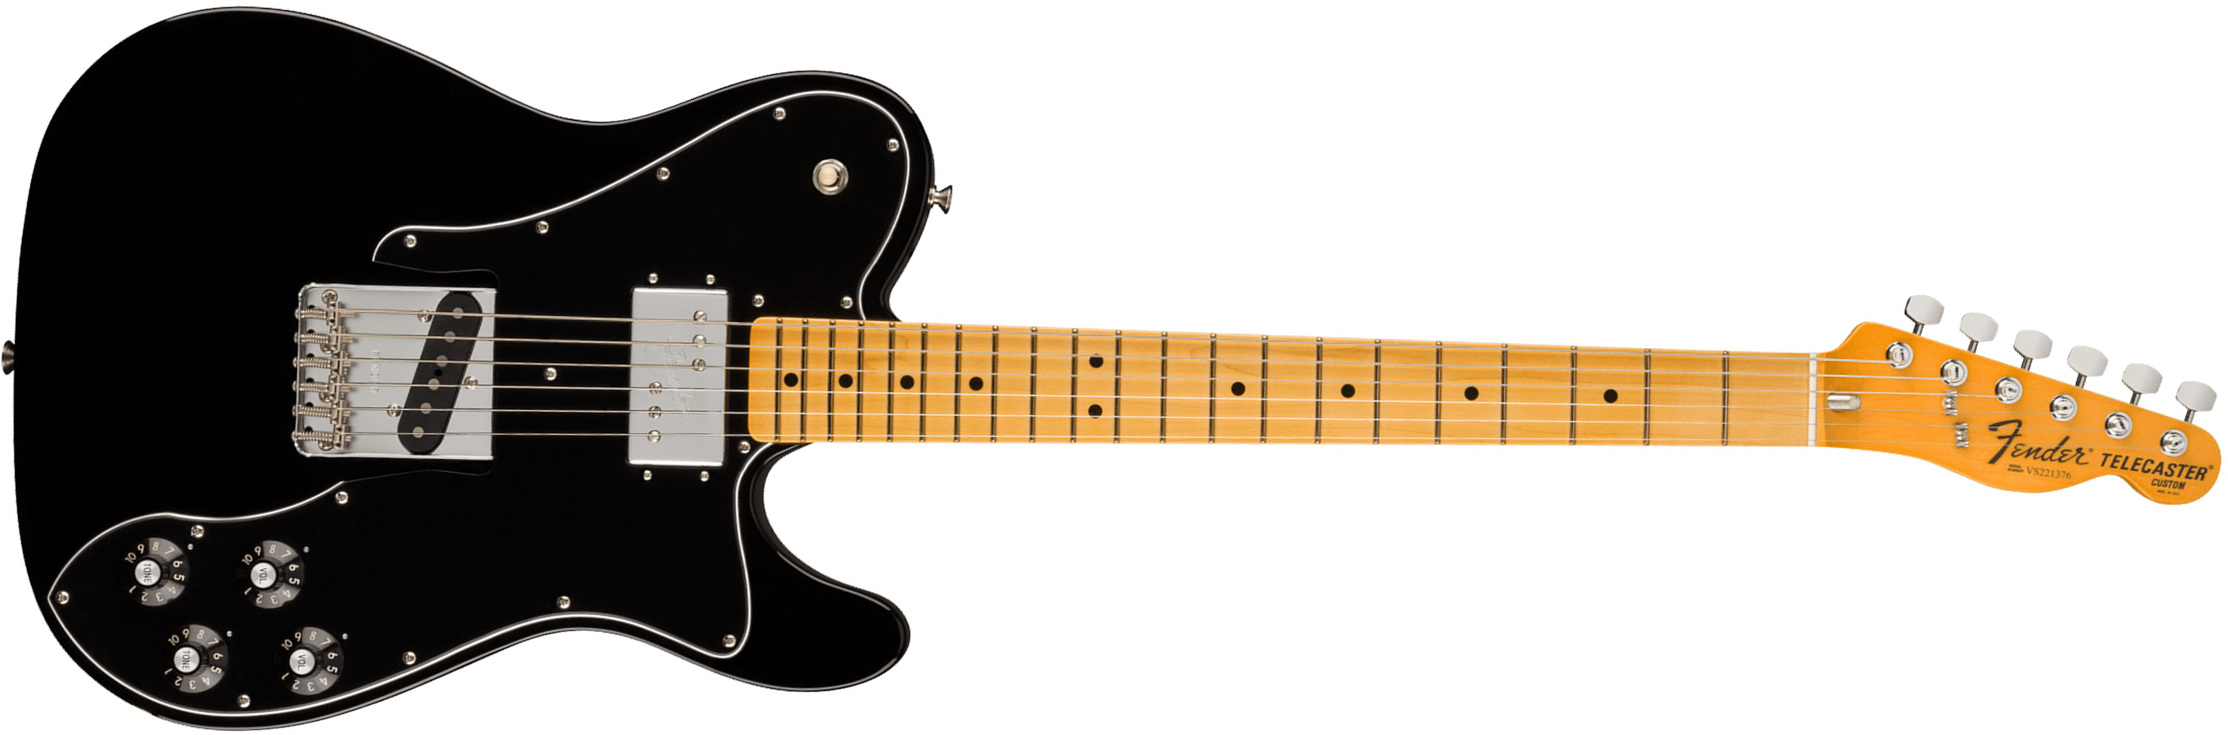 Fender Tele Custom 1977 American Vintage Ii Usa Sh Ht Mn - Black - Guitare Électrique Forme Tel - Main picture